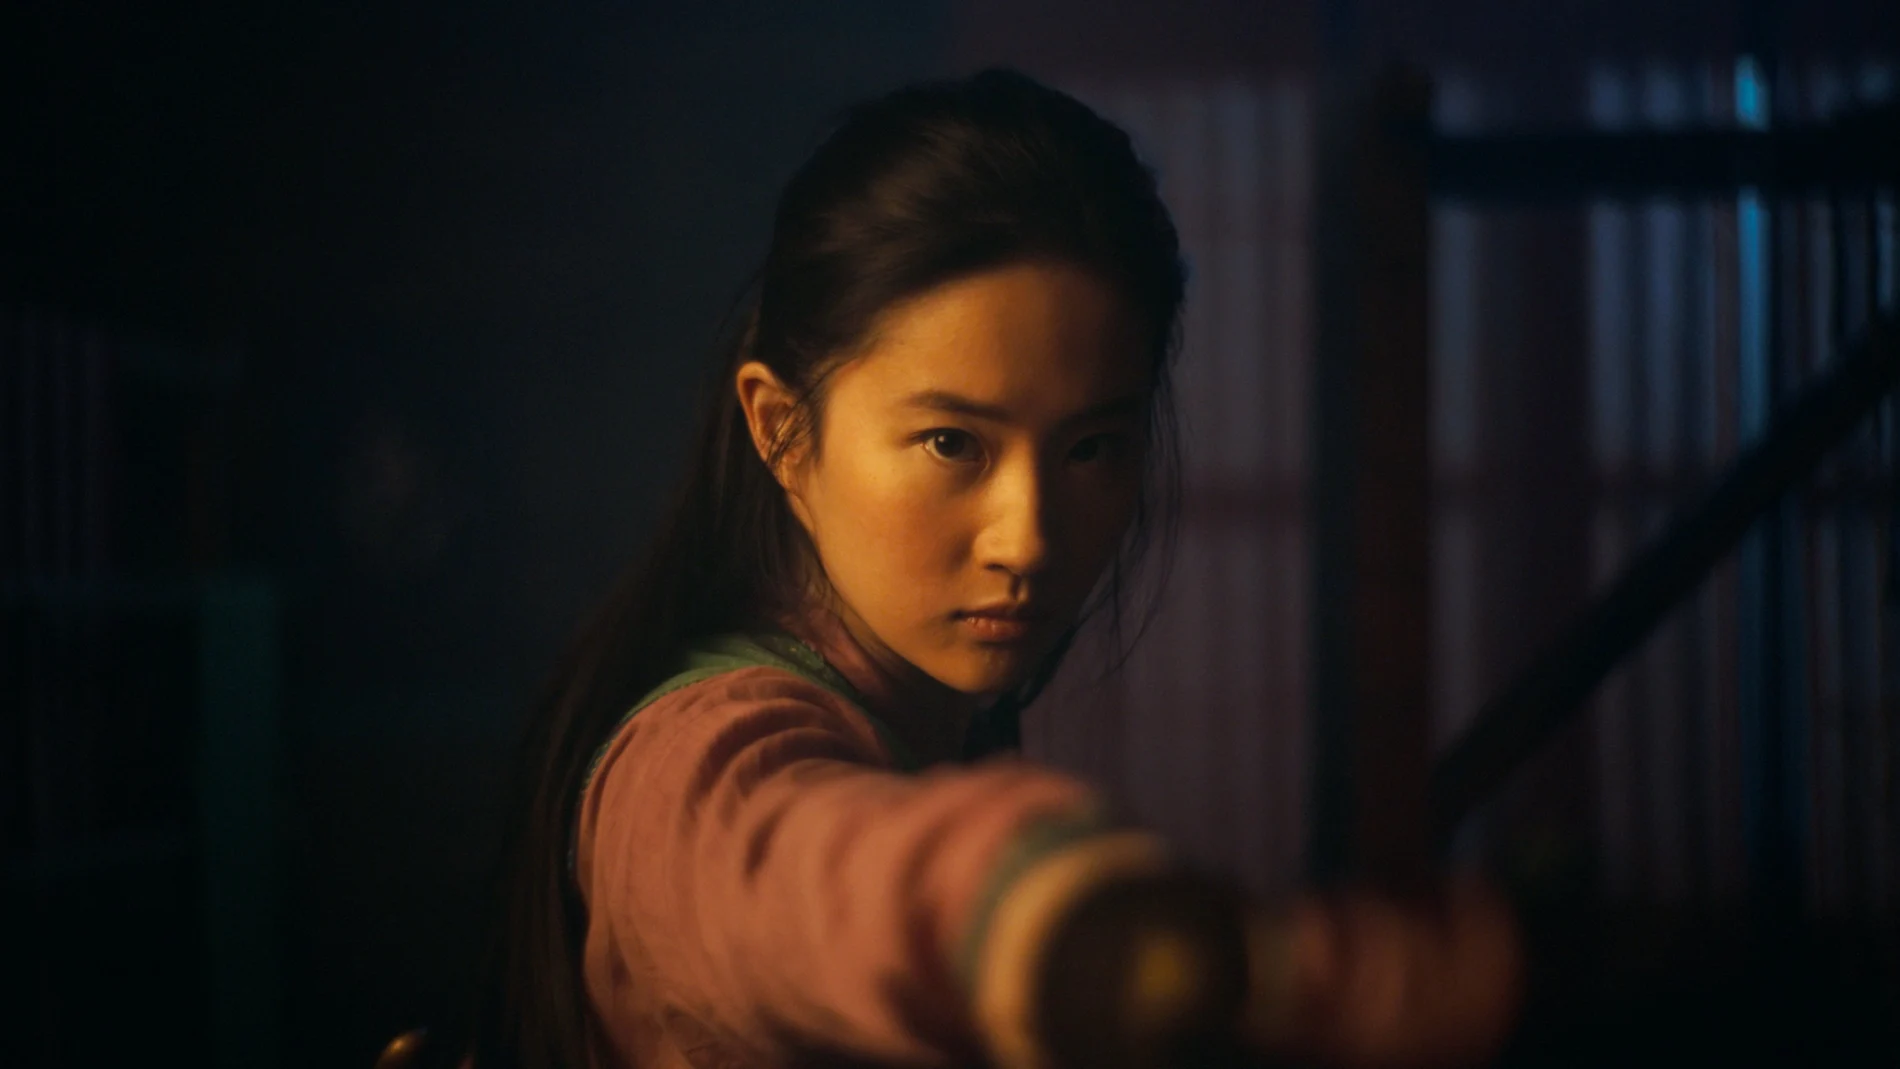 La actriz Liu Yifei interpreta a la legendaria guerrera china en "Mulan"